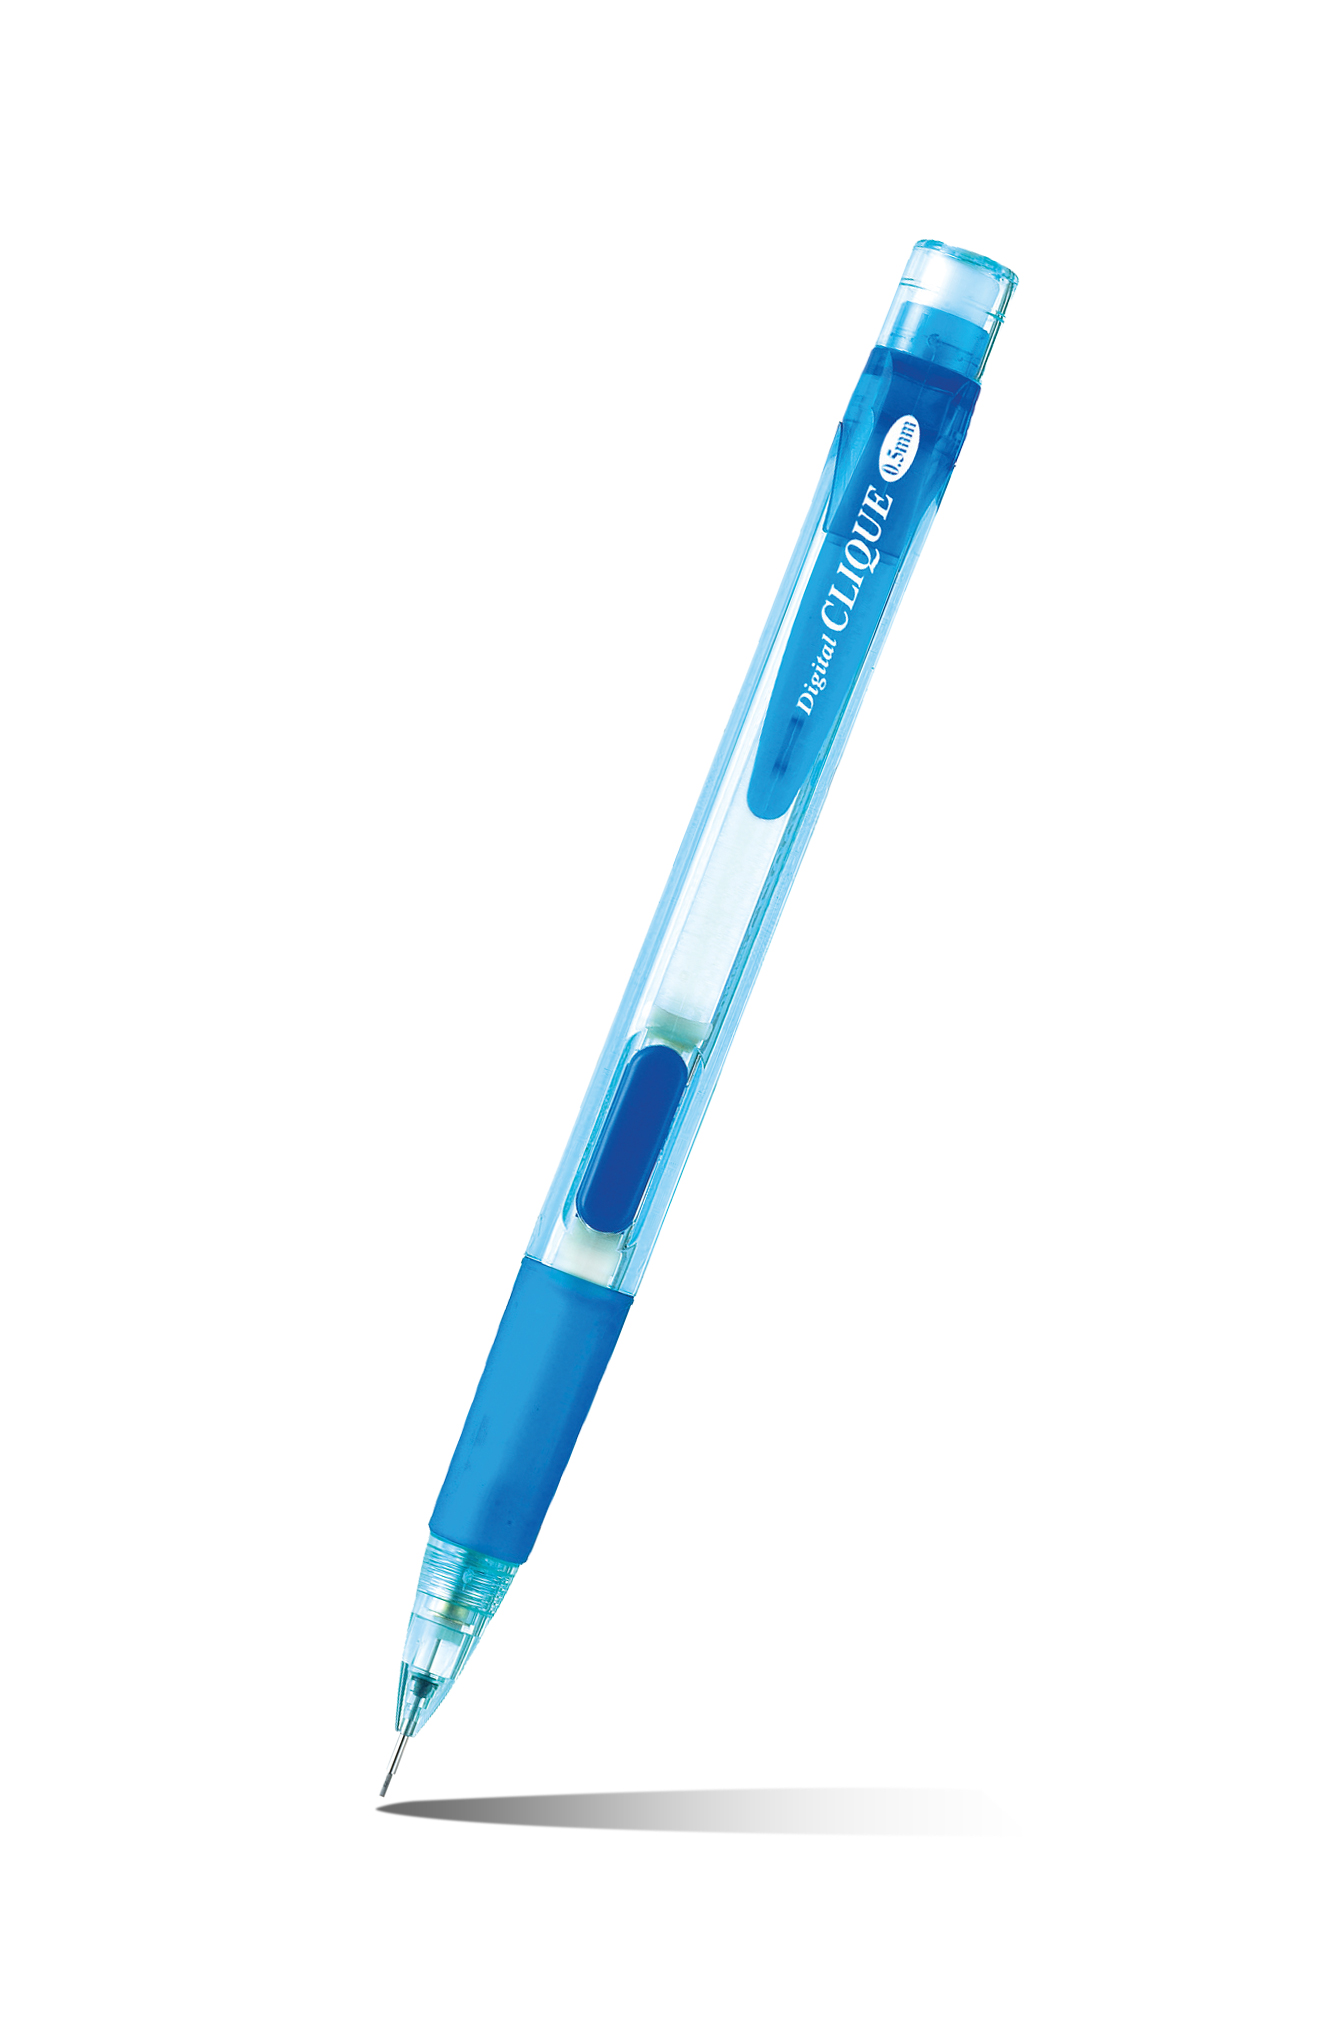 MonAmi Digital Clique Mechanical Pencil 0.7 mm 12 pc Lead Assorted Colors New 